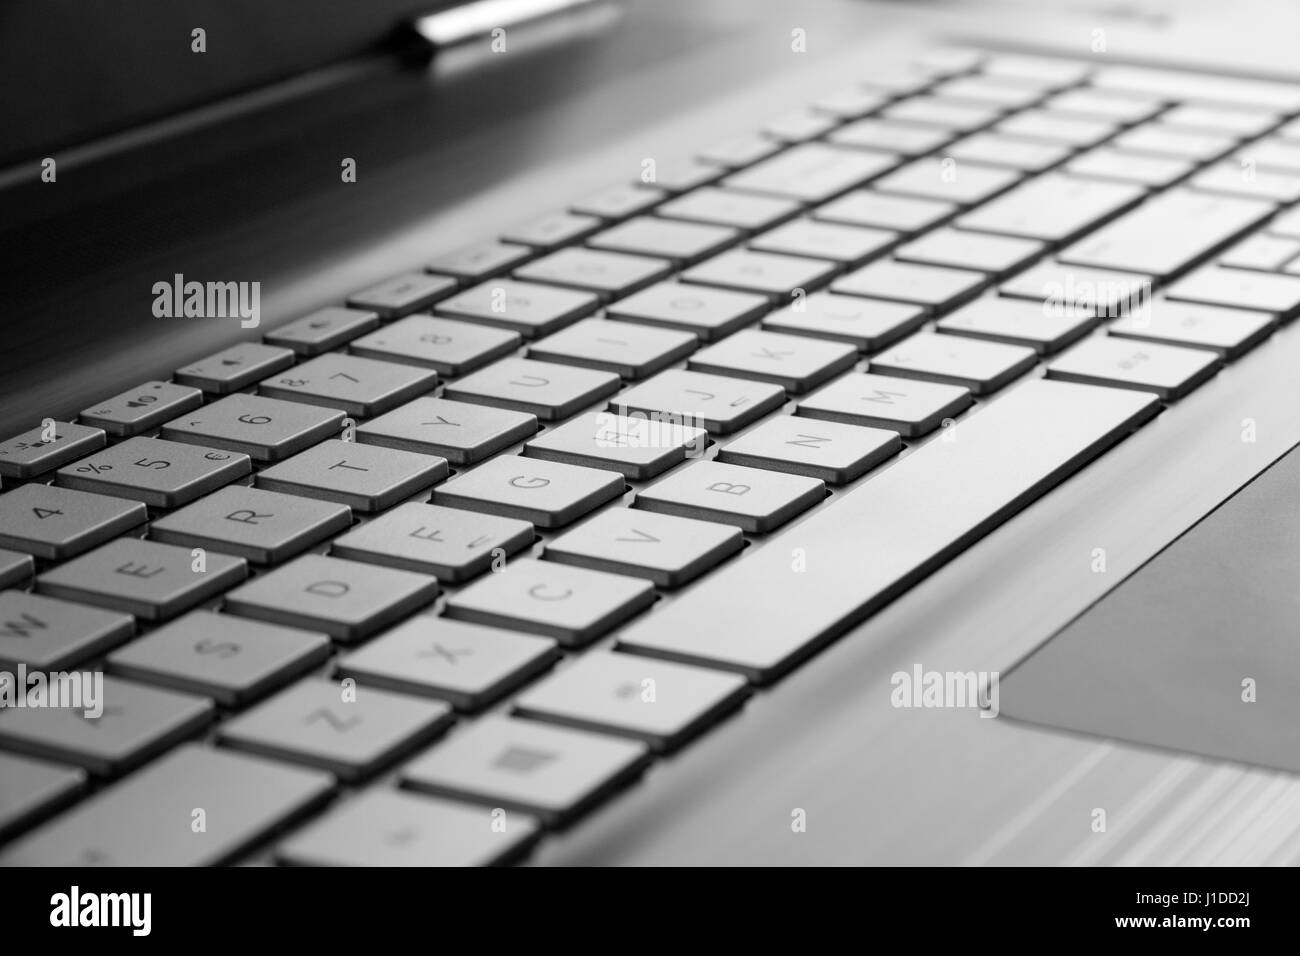 Laptop keyboard close-up Stock Photo